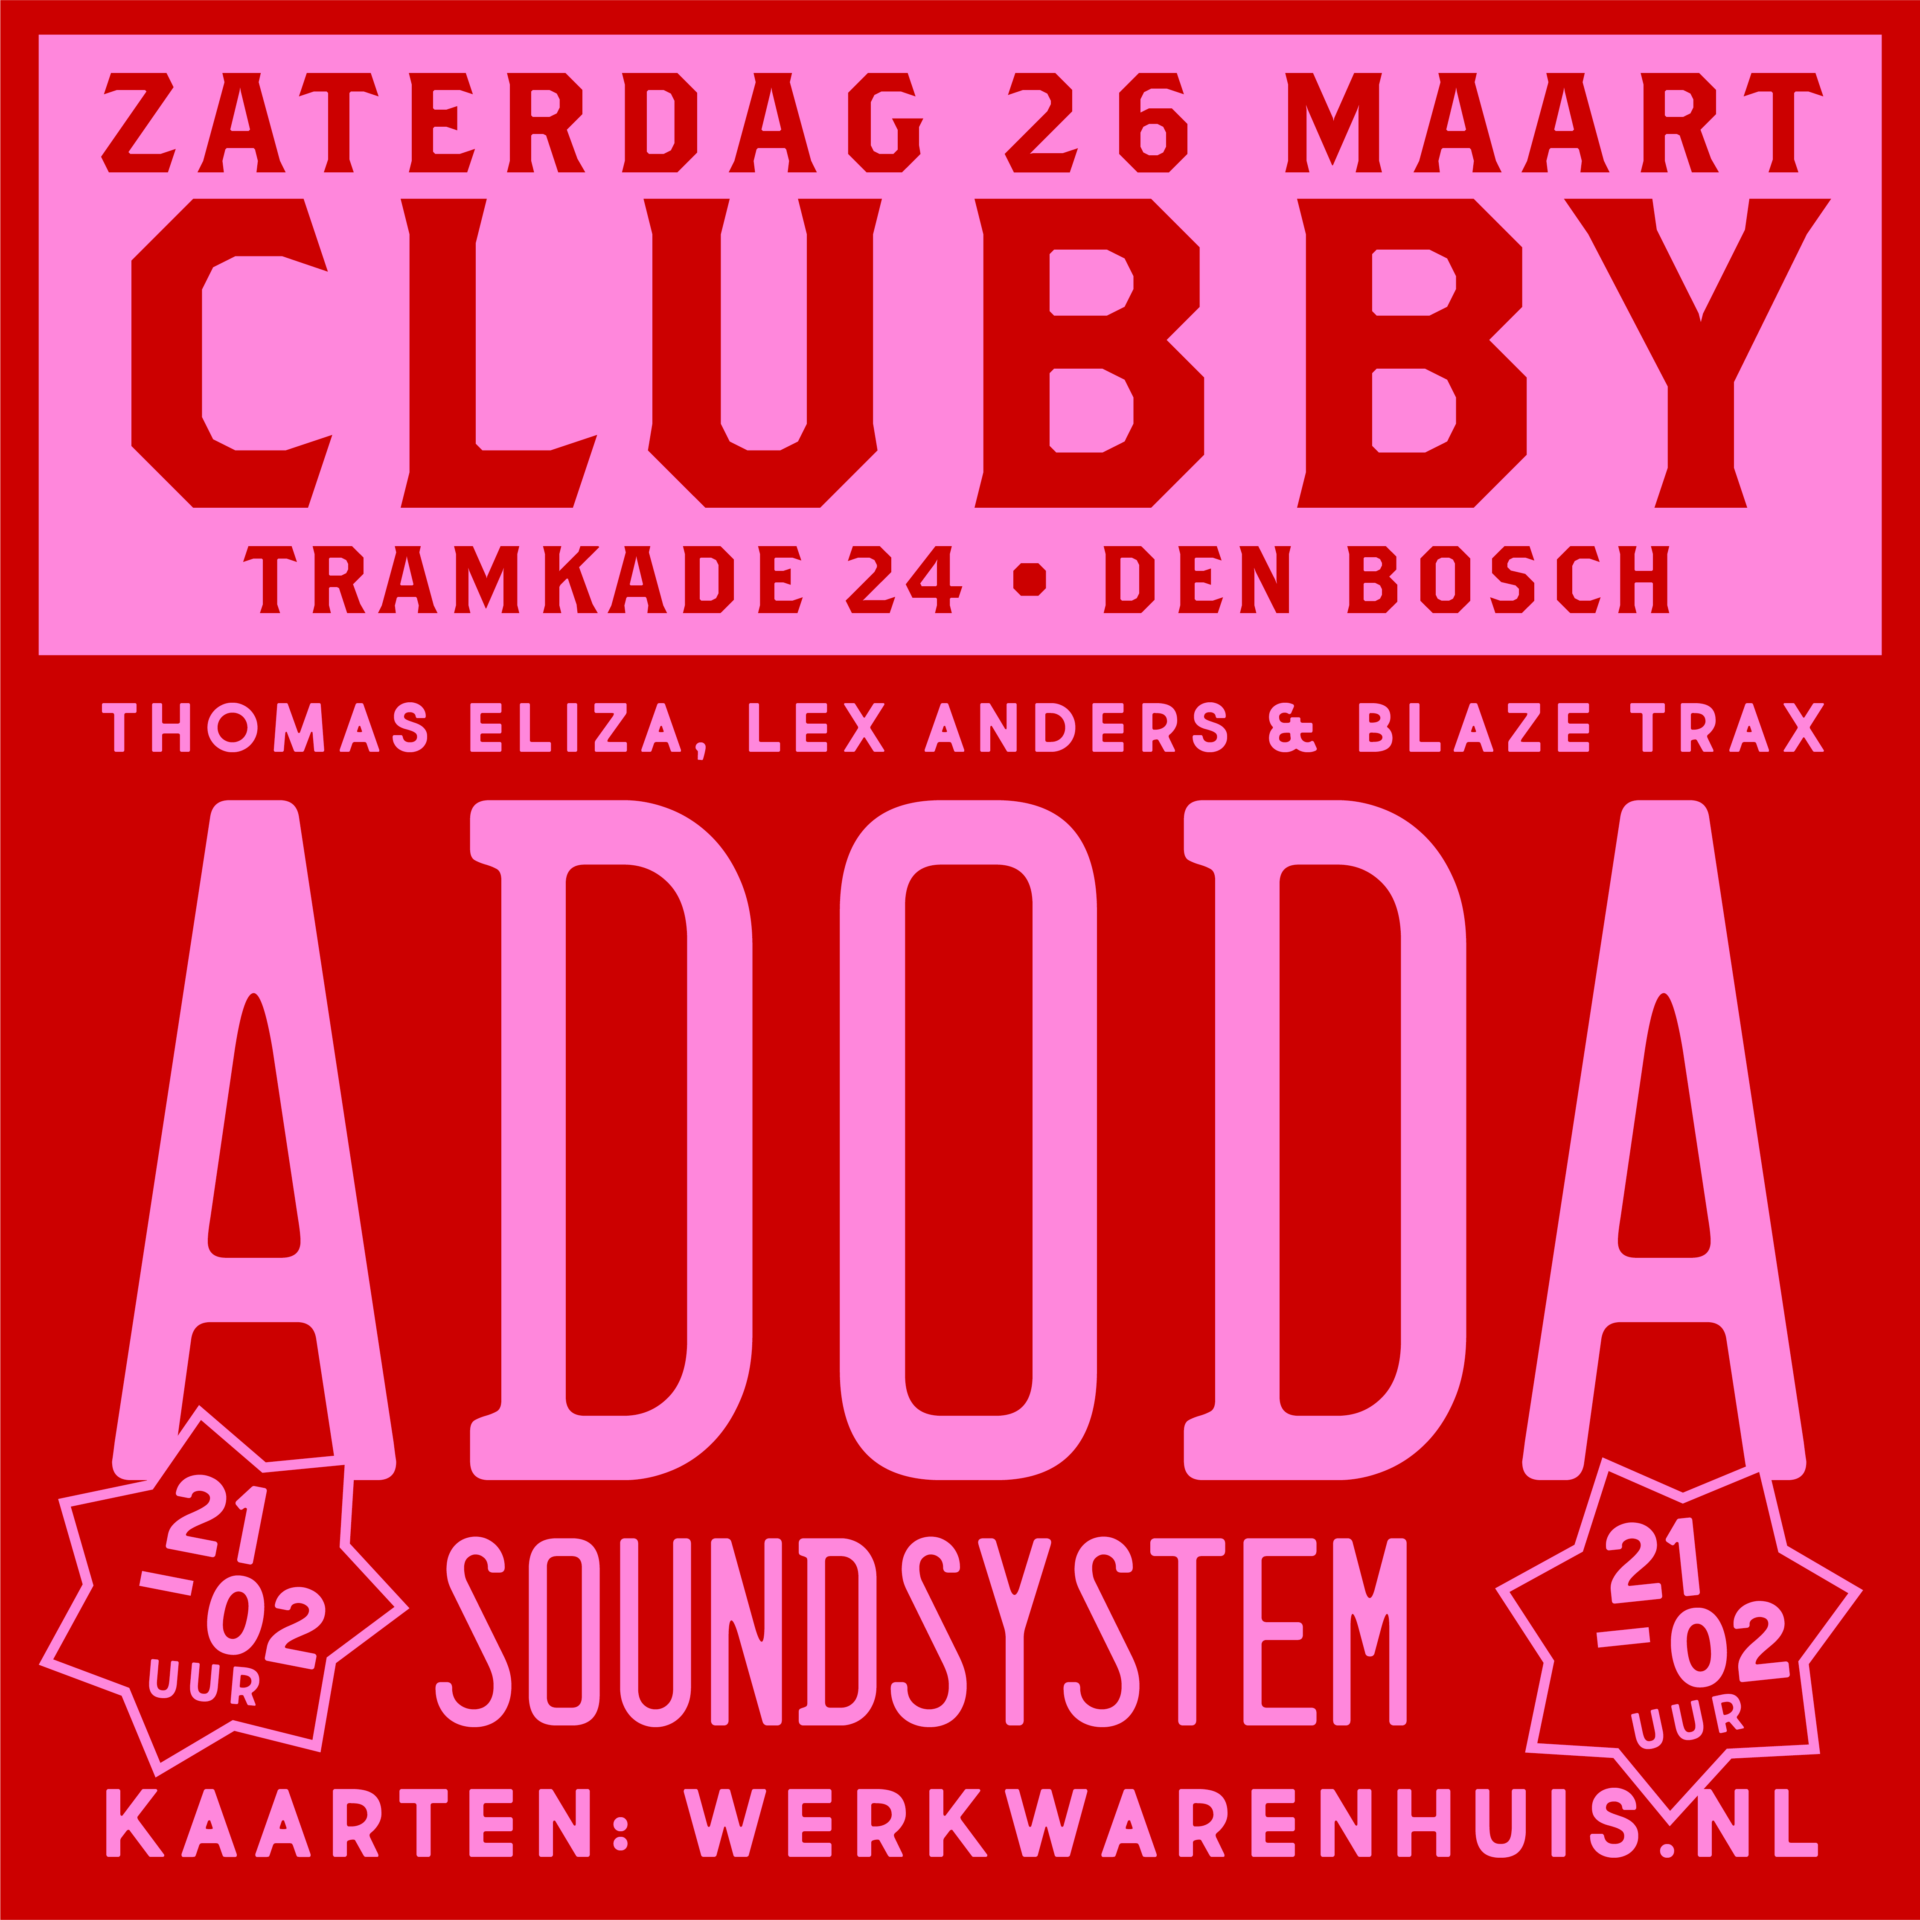 Adoda soundsystem tickets online